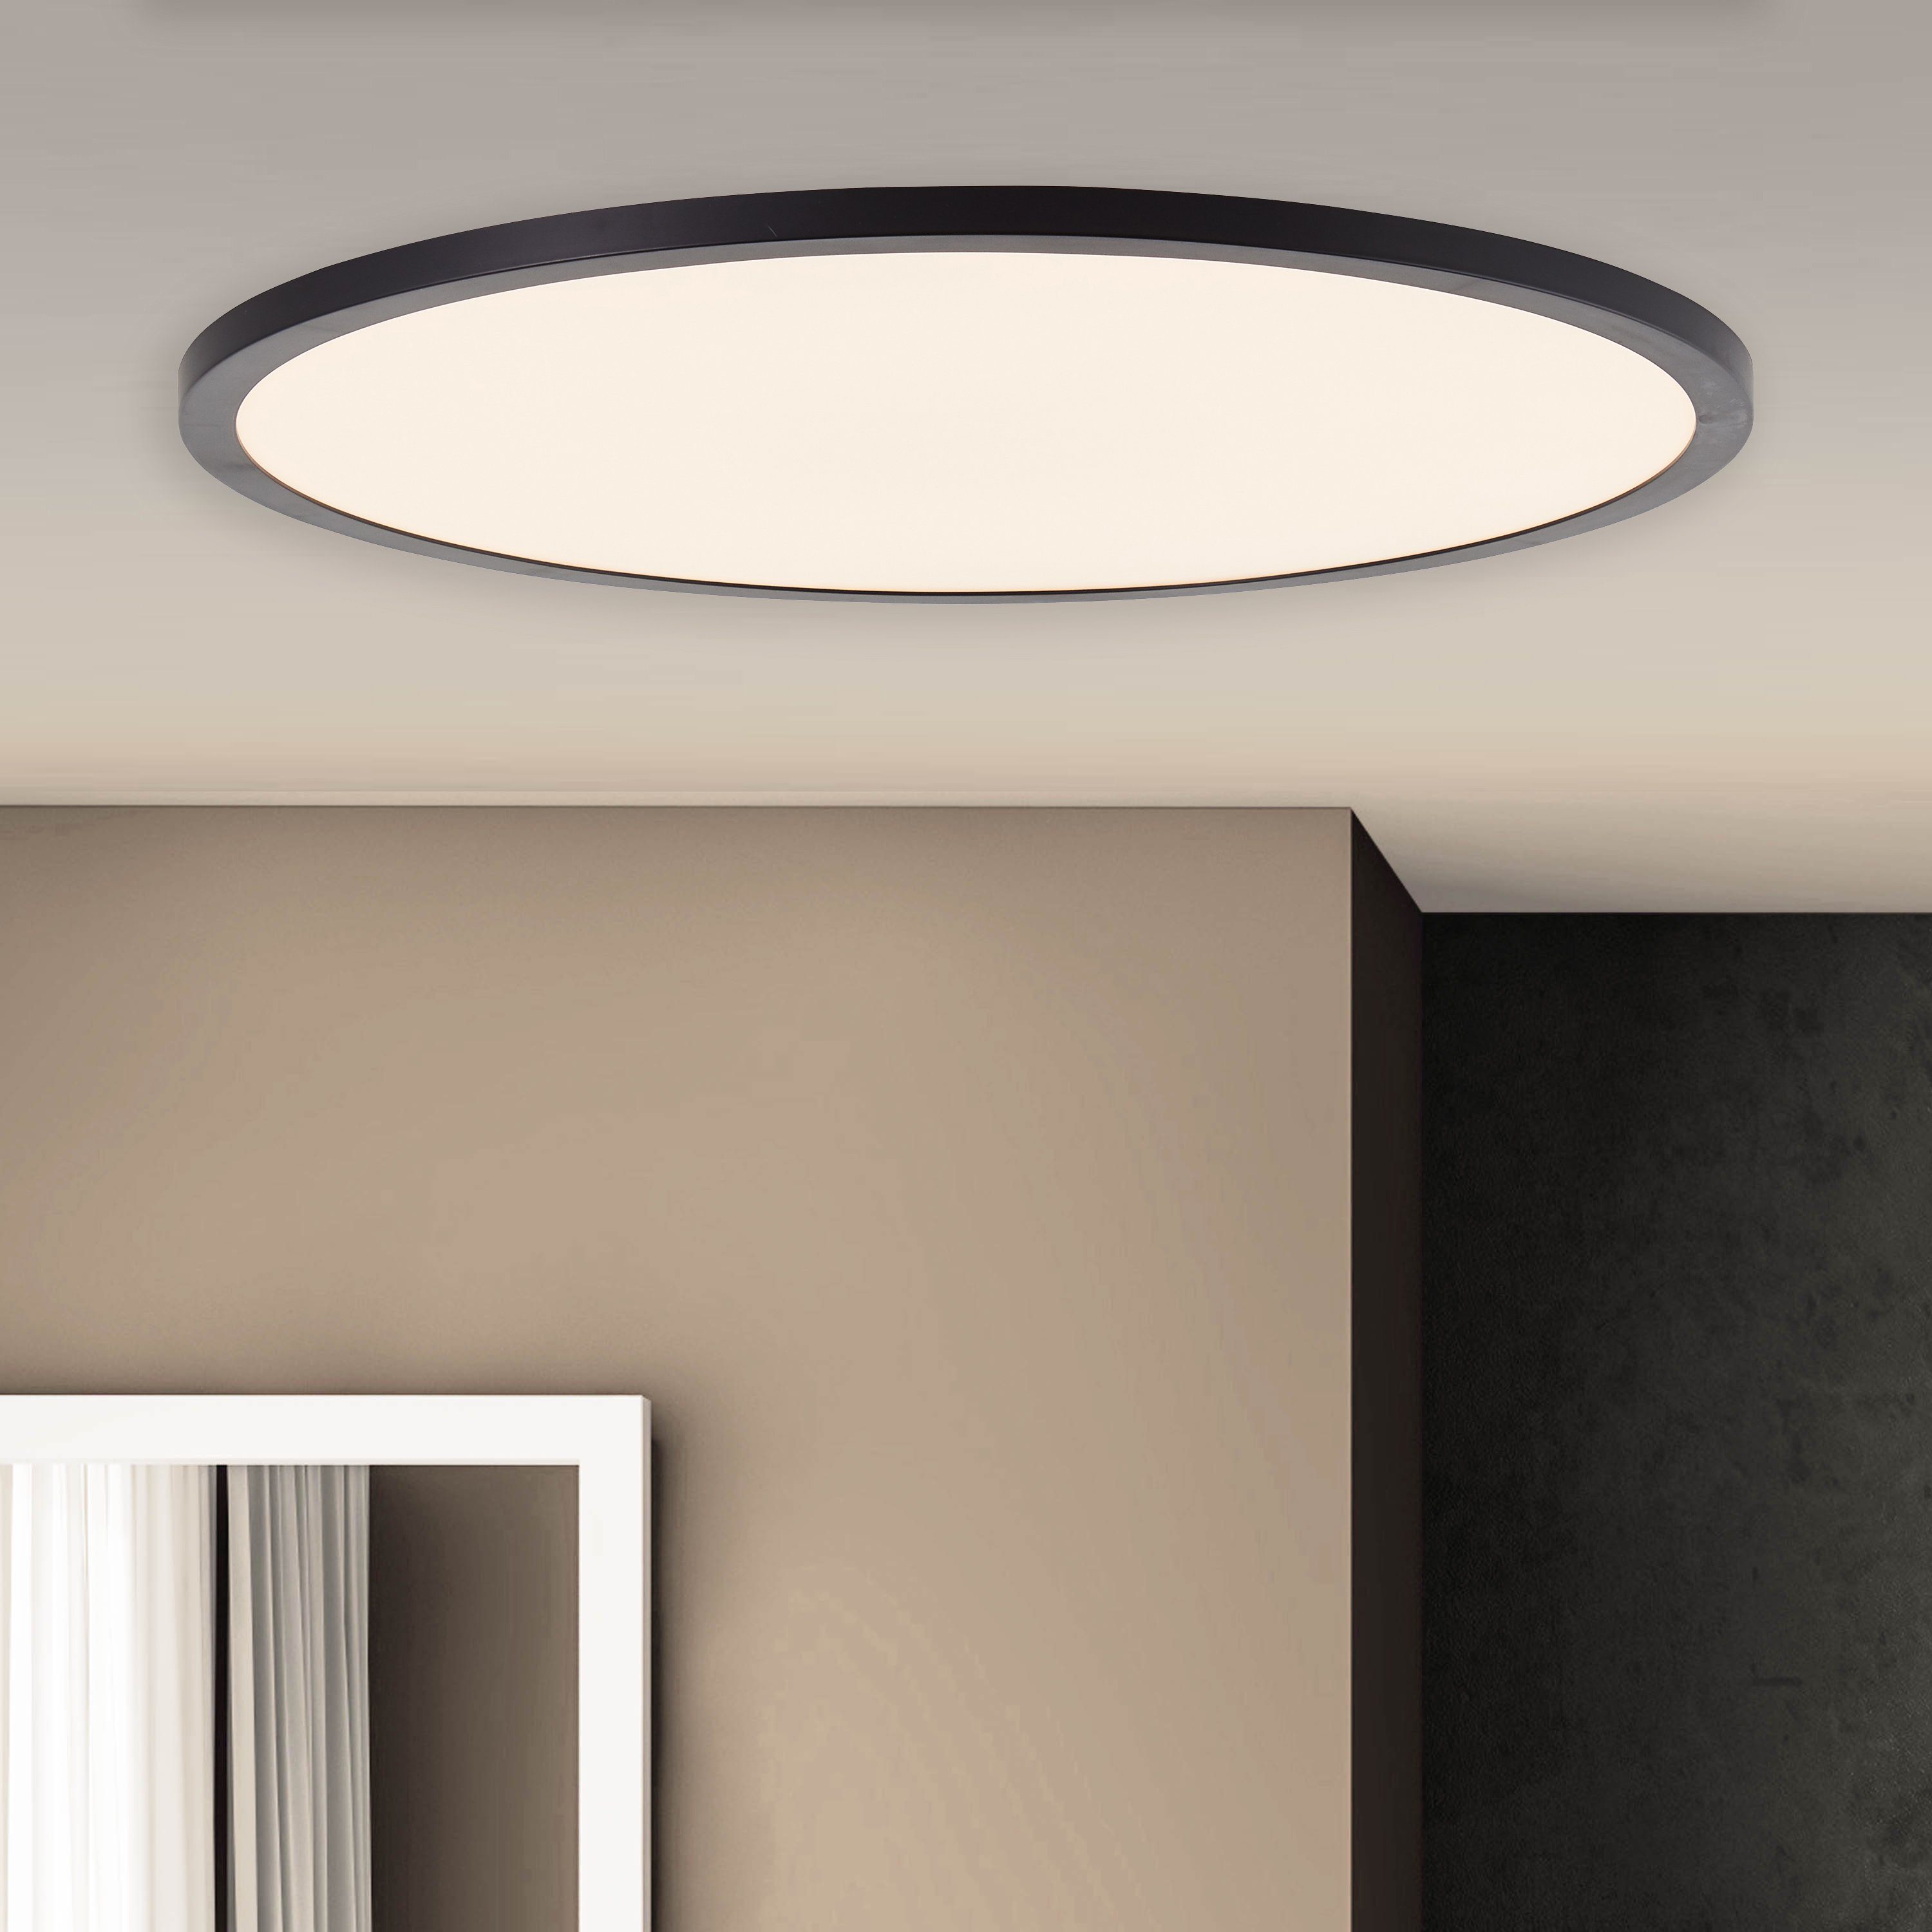 1x 3000-6500K, Tuco, integrie, Tuco 50cm Lampe, schwarz/weiß, / Brilliant Dimmbar Aufbauleuchte Nachtlichtfunktion LED Deckenaufbau-Paneel LED